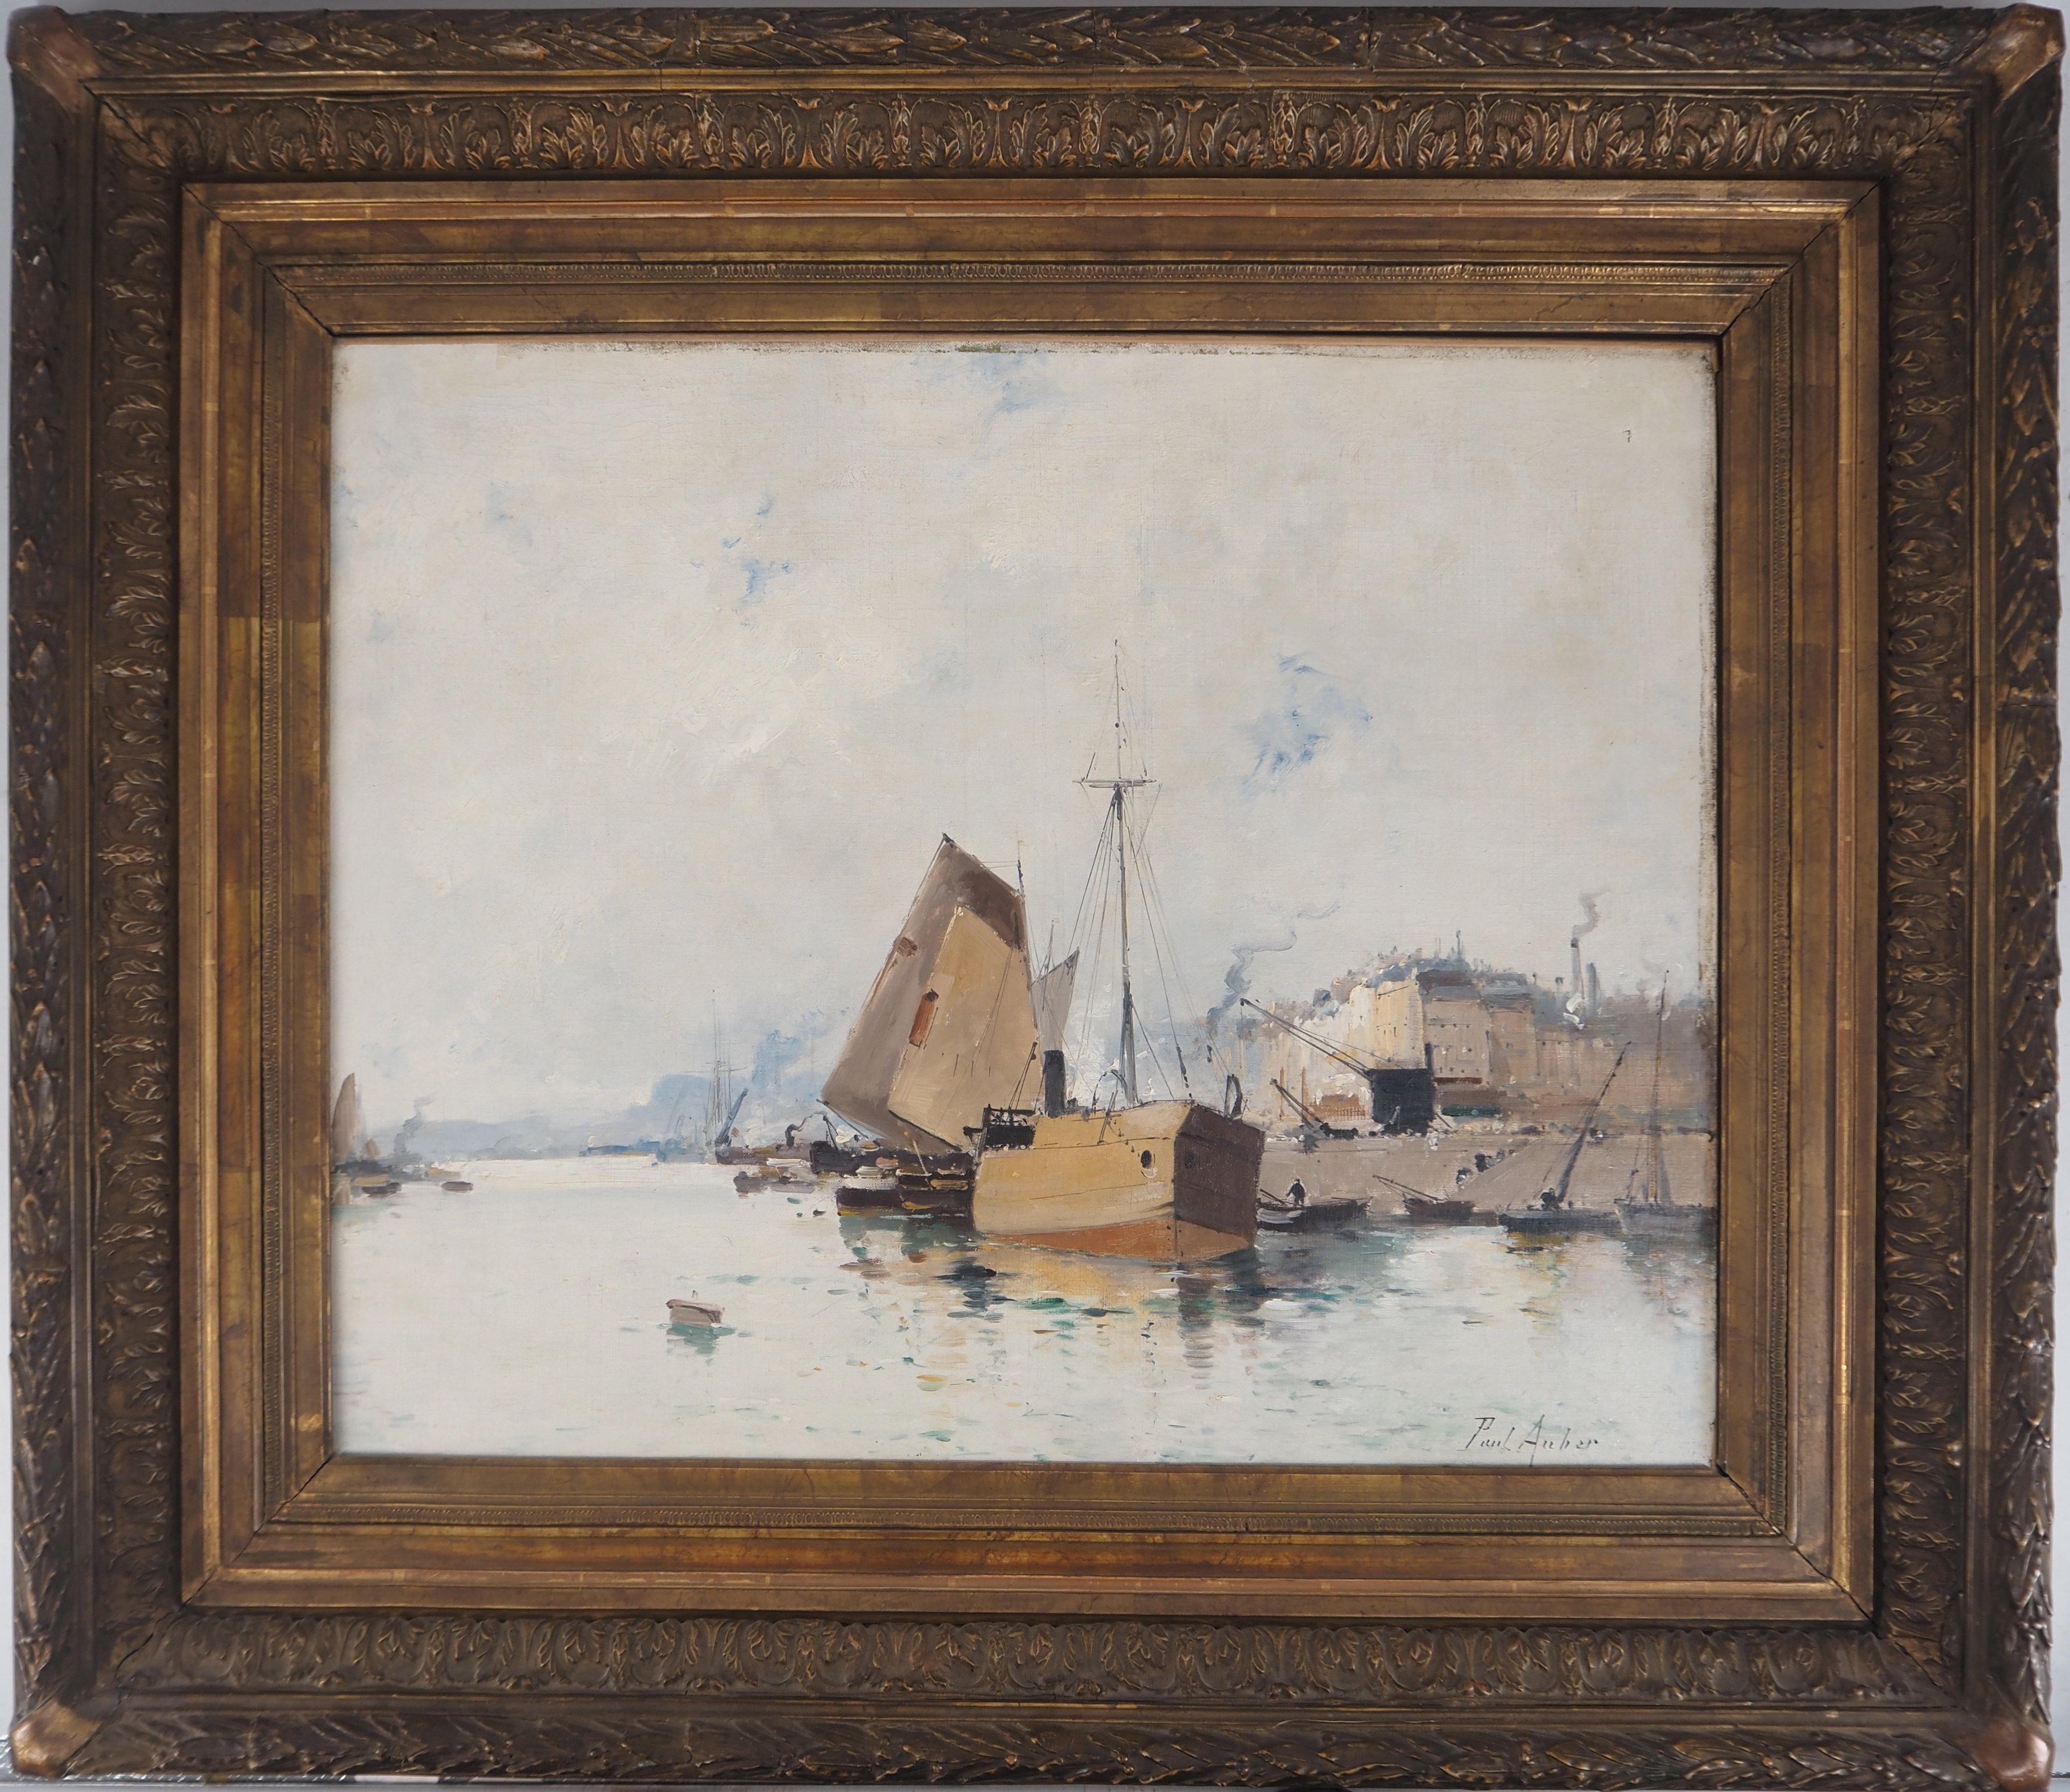 Boats Leaving the Harbor – Originalgemälde auf Leinwand – signiert